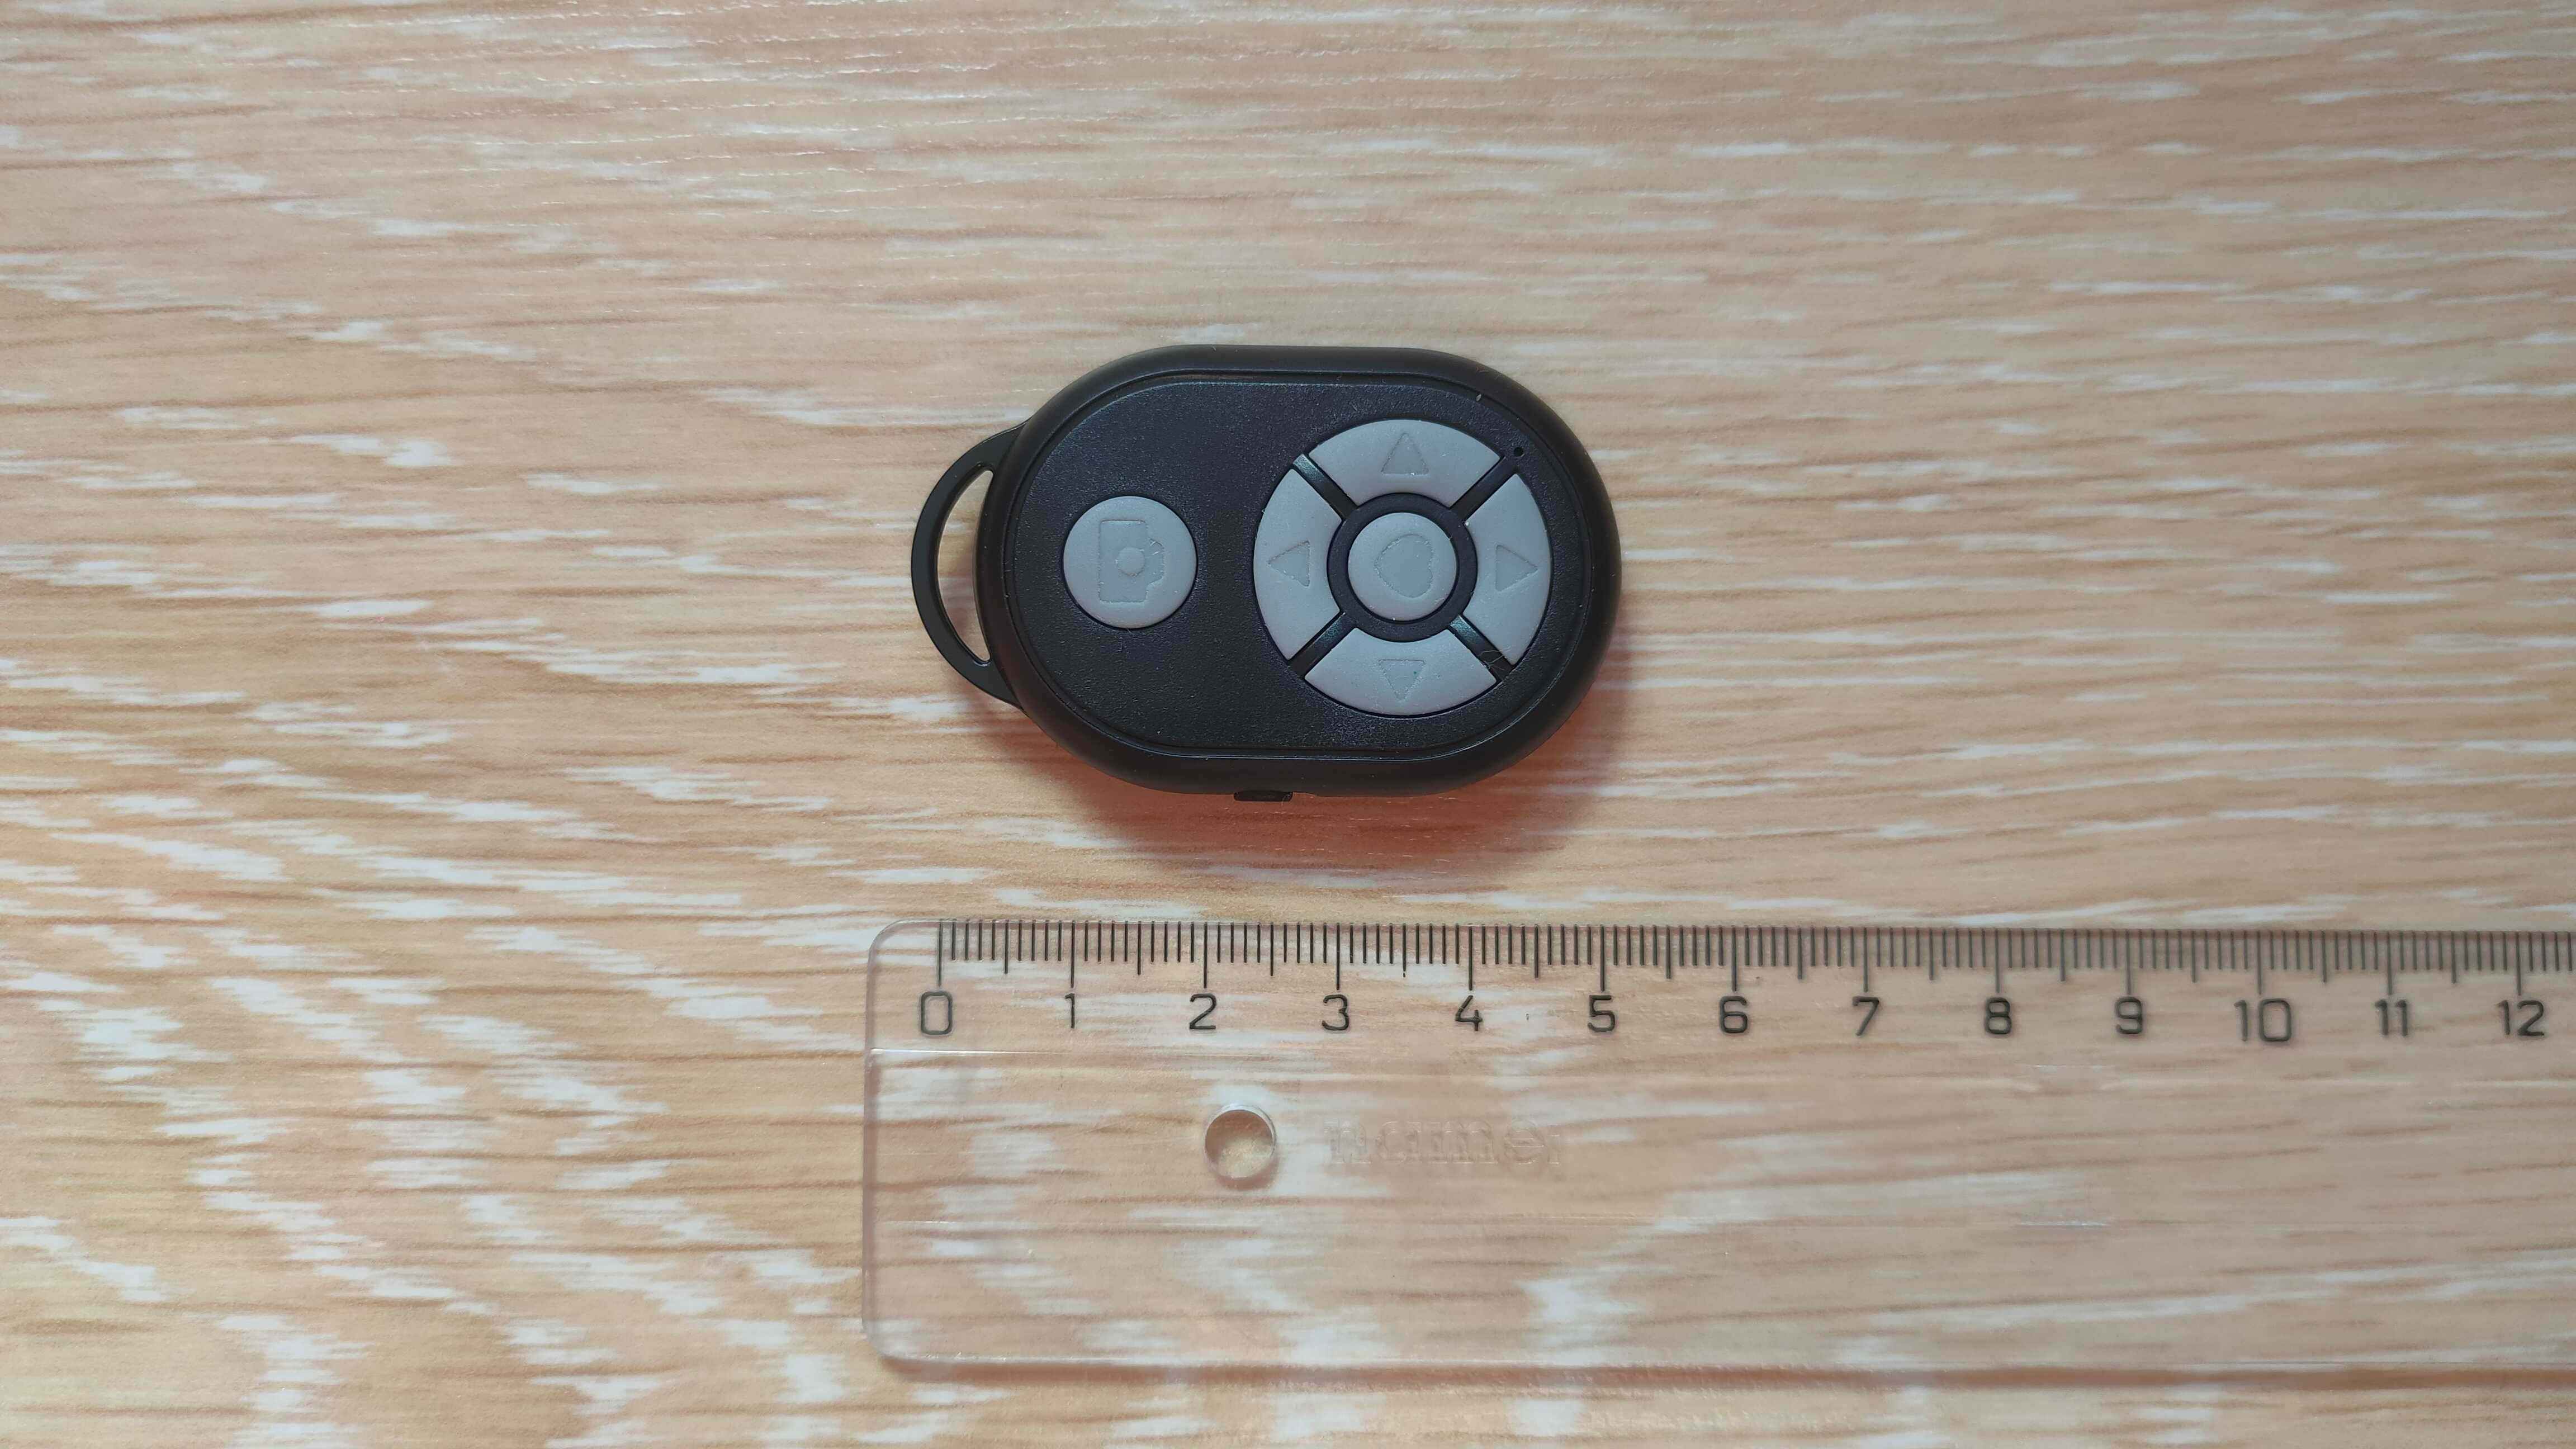 Bluetooth Пульт для перелистывания тик тока TikTok и Фотосъёмки